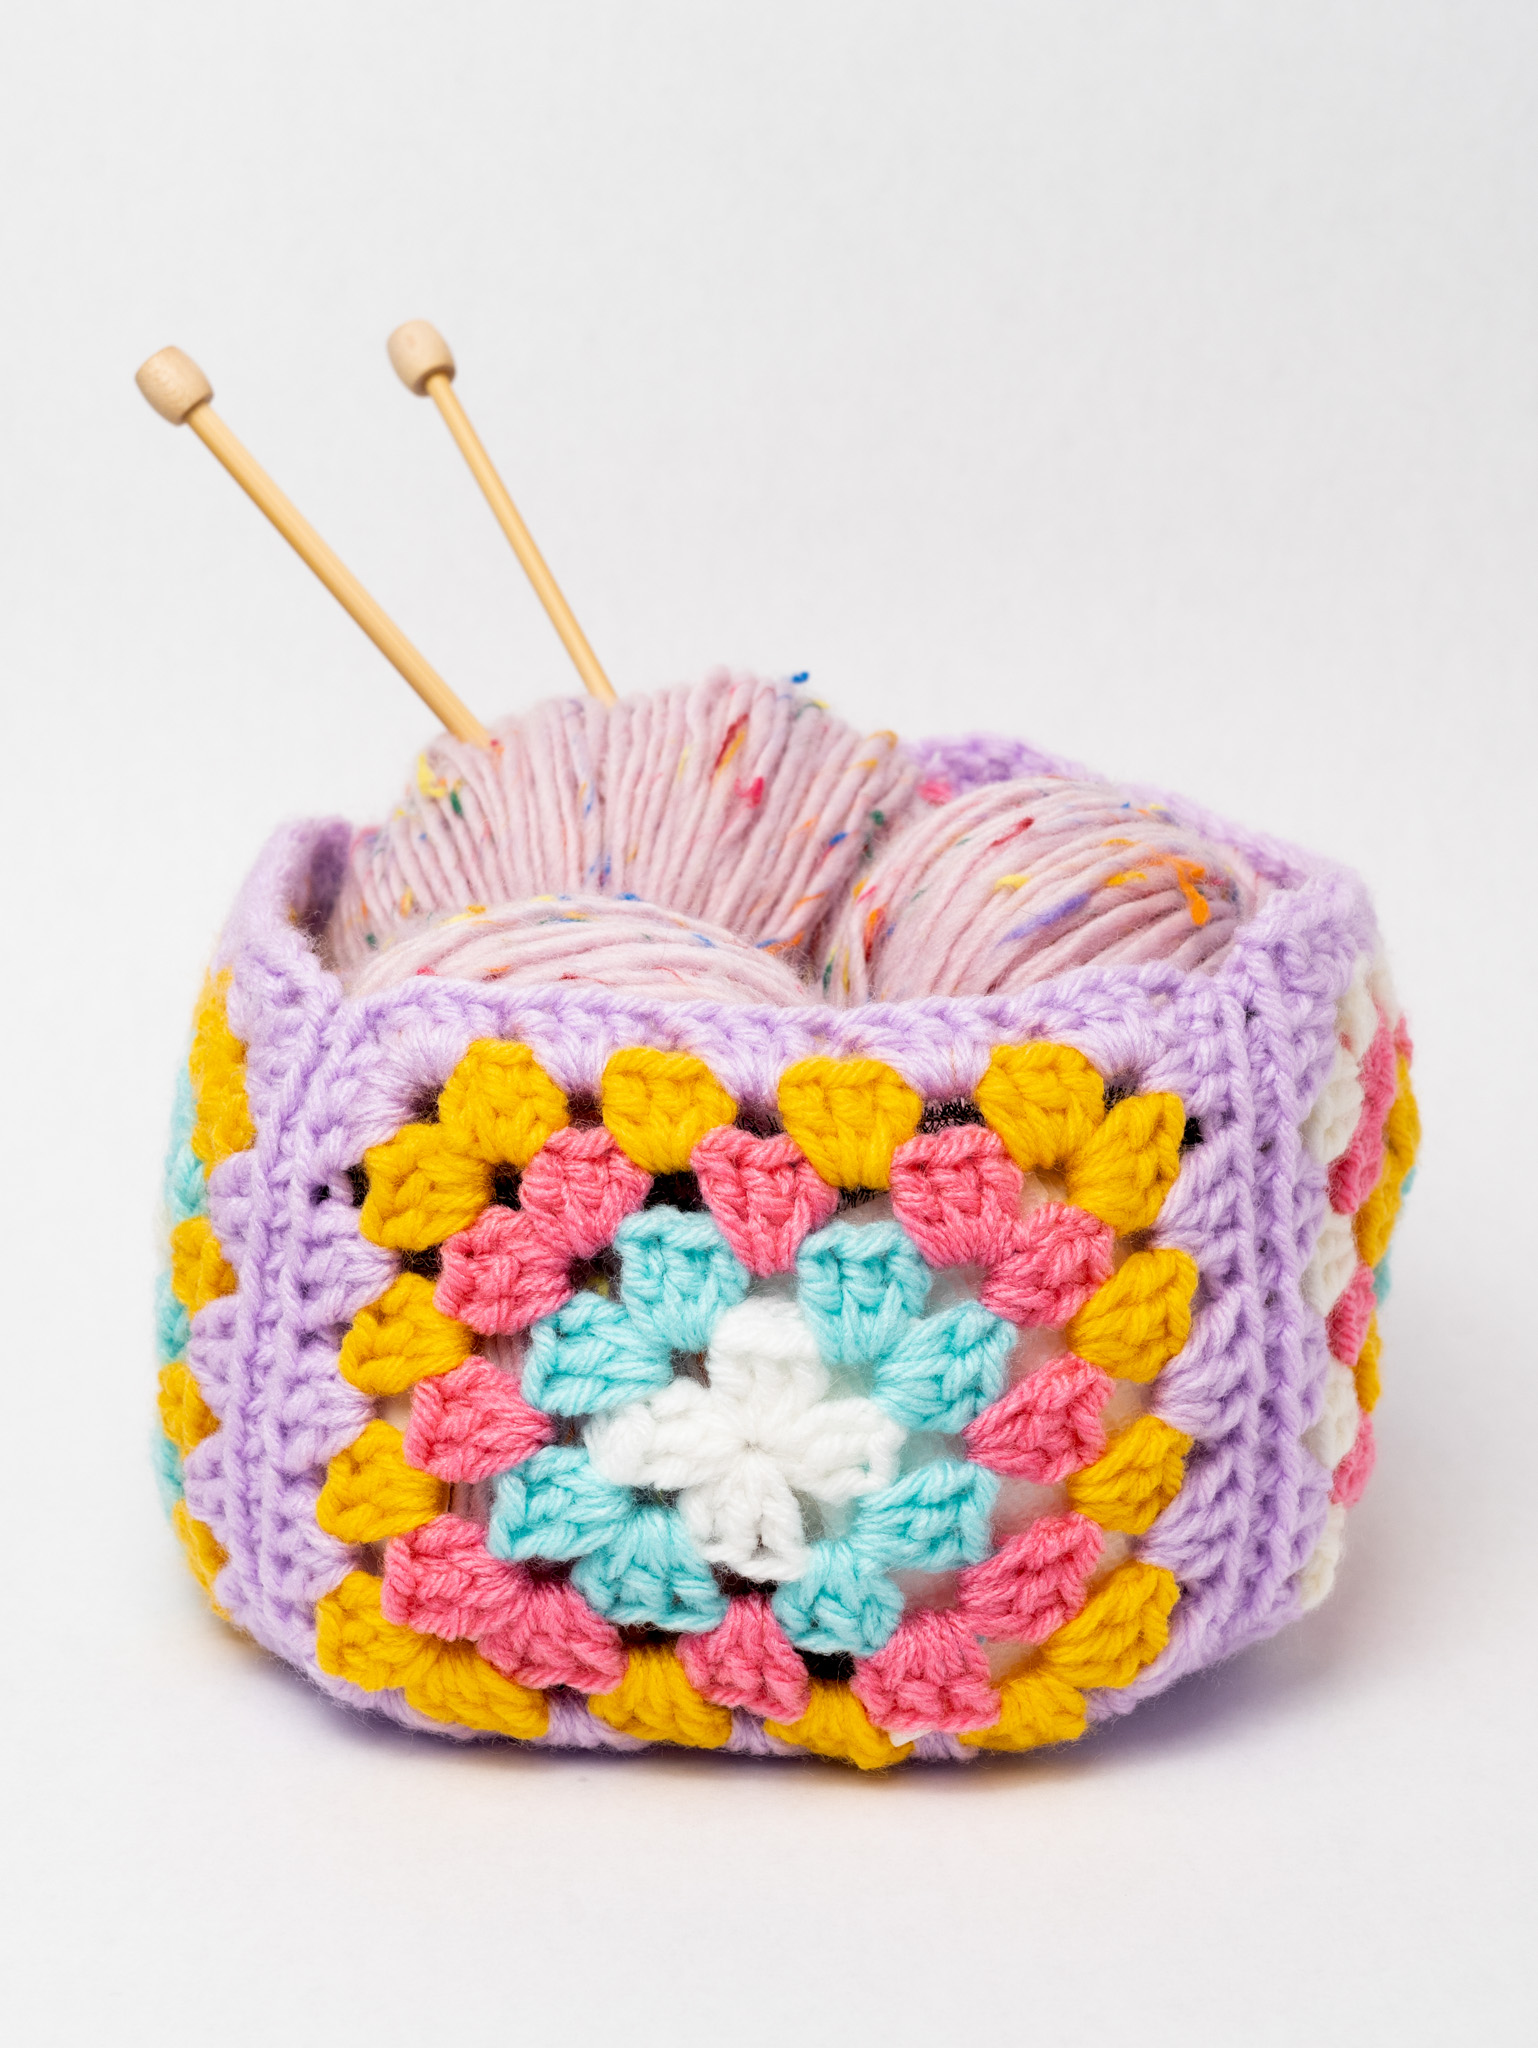 Micro Crochet Tutorial  Techniques, materials and full granny